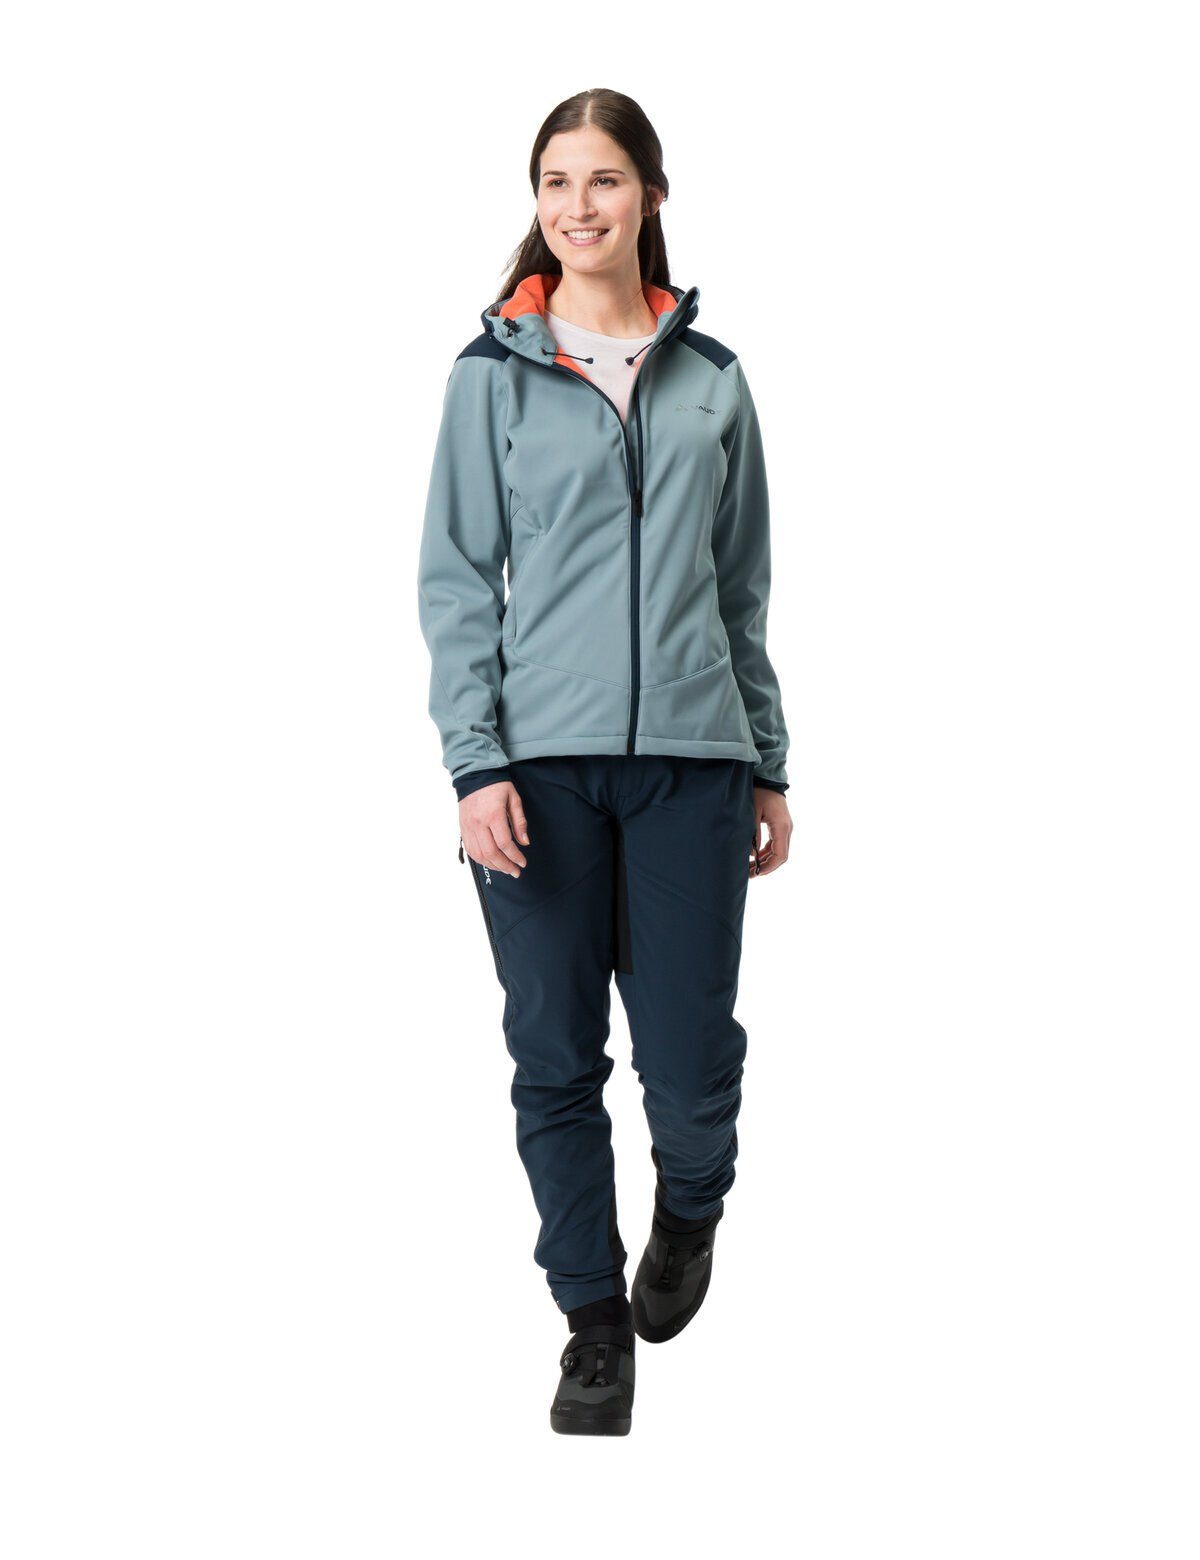 kompensiert Klimaneutral Qimsa Women's Jacket (1-St) Outdoorjacke cloudy VAUDE blue Softshell